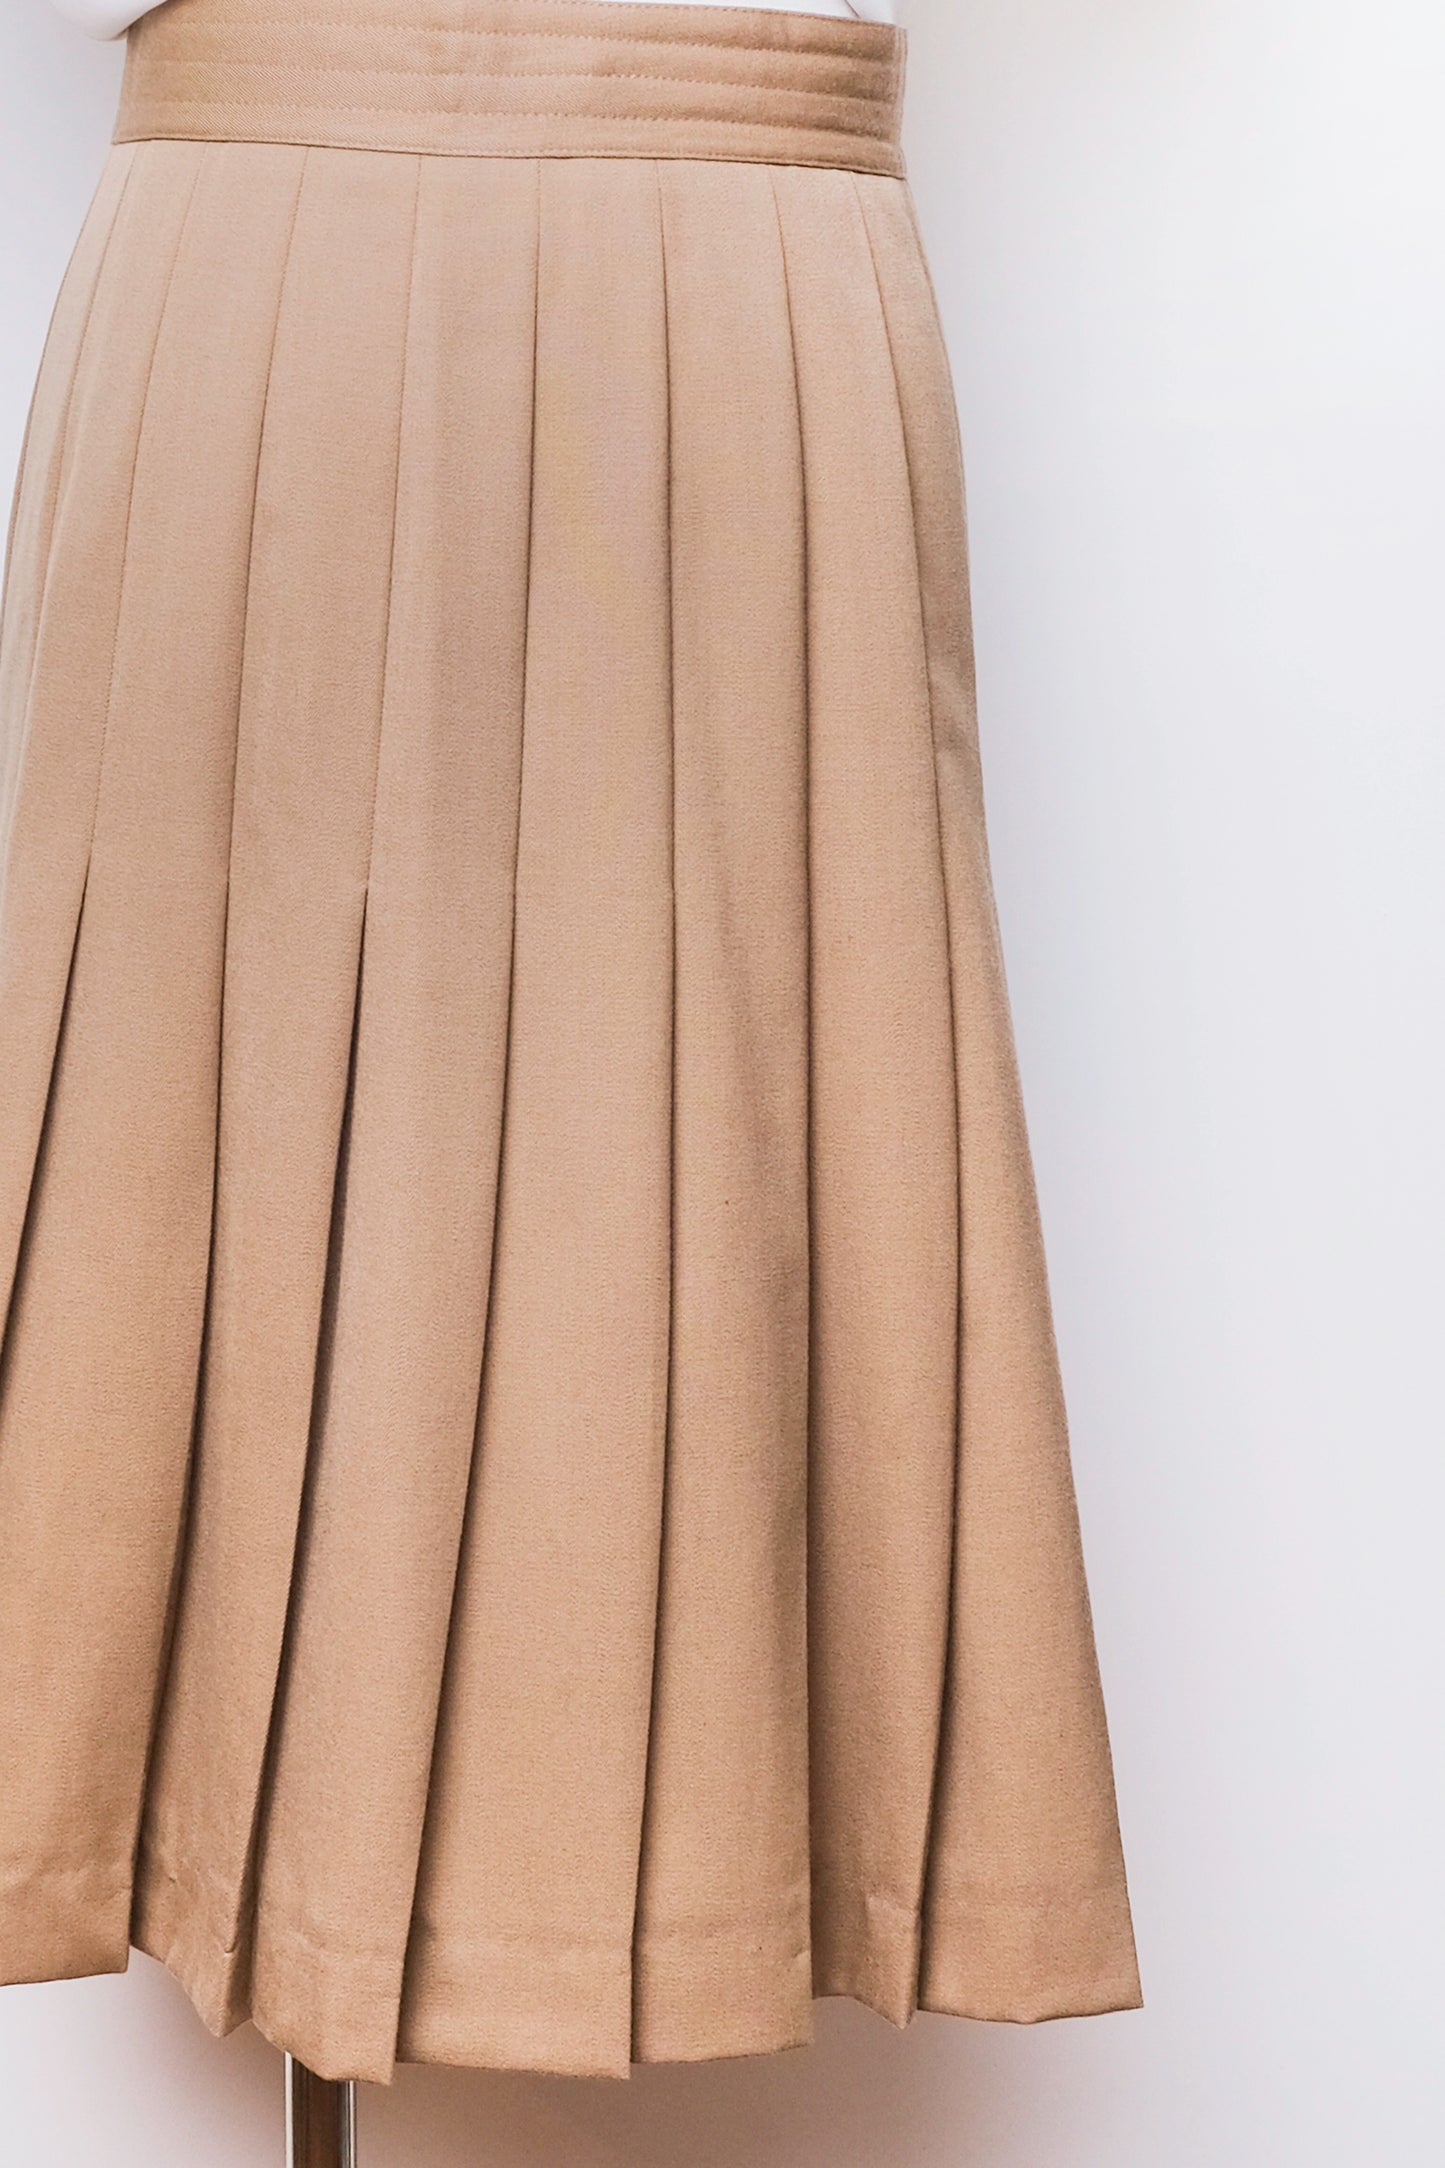 Harvé Benard Ltd Khaki Pleated Wool Skirt US 4, 90's